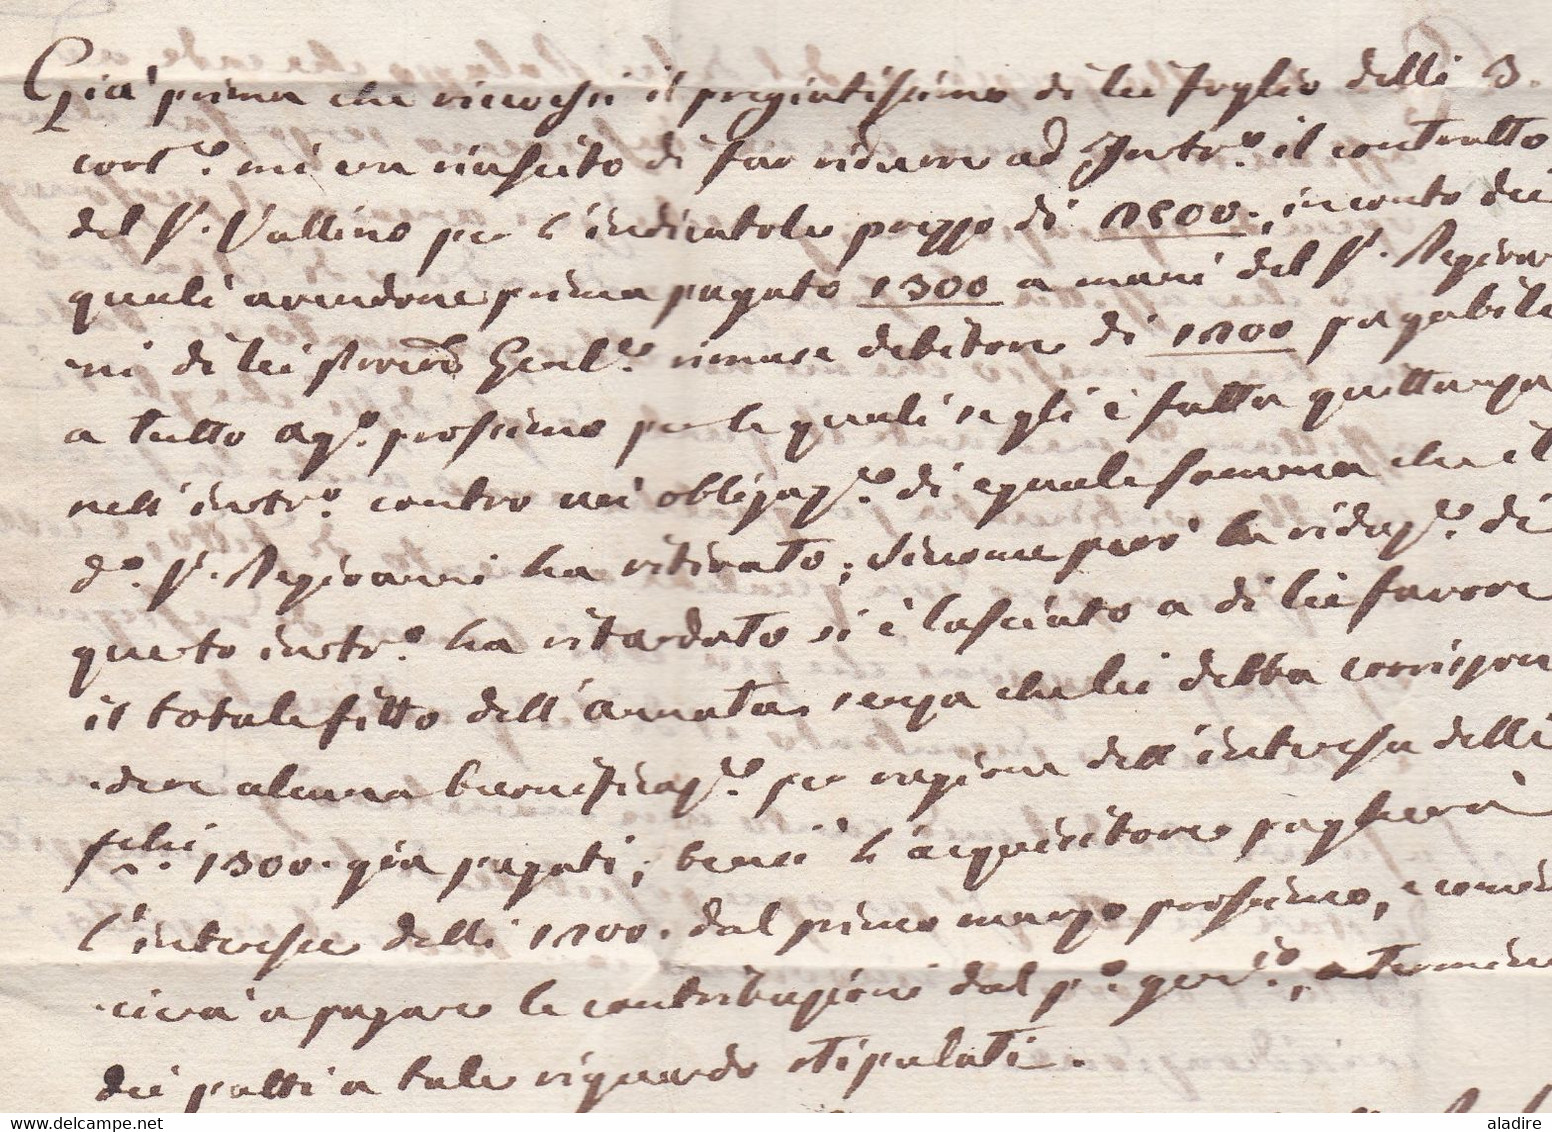 1812 - marque postale 106 CAZAL Casale (dept de Marengo - Alessandria) sur lettre pliée de 2 p. de Cafaleli vers Mantova